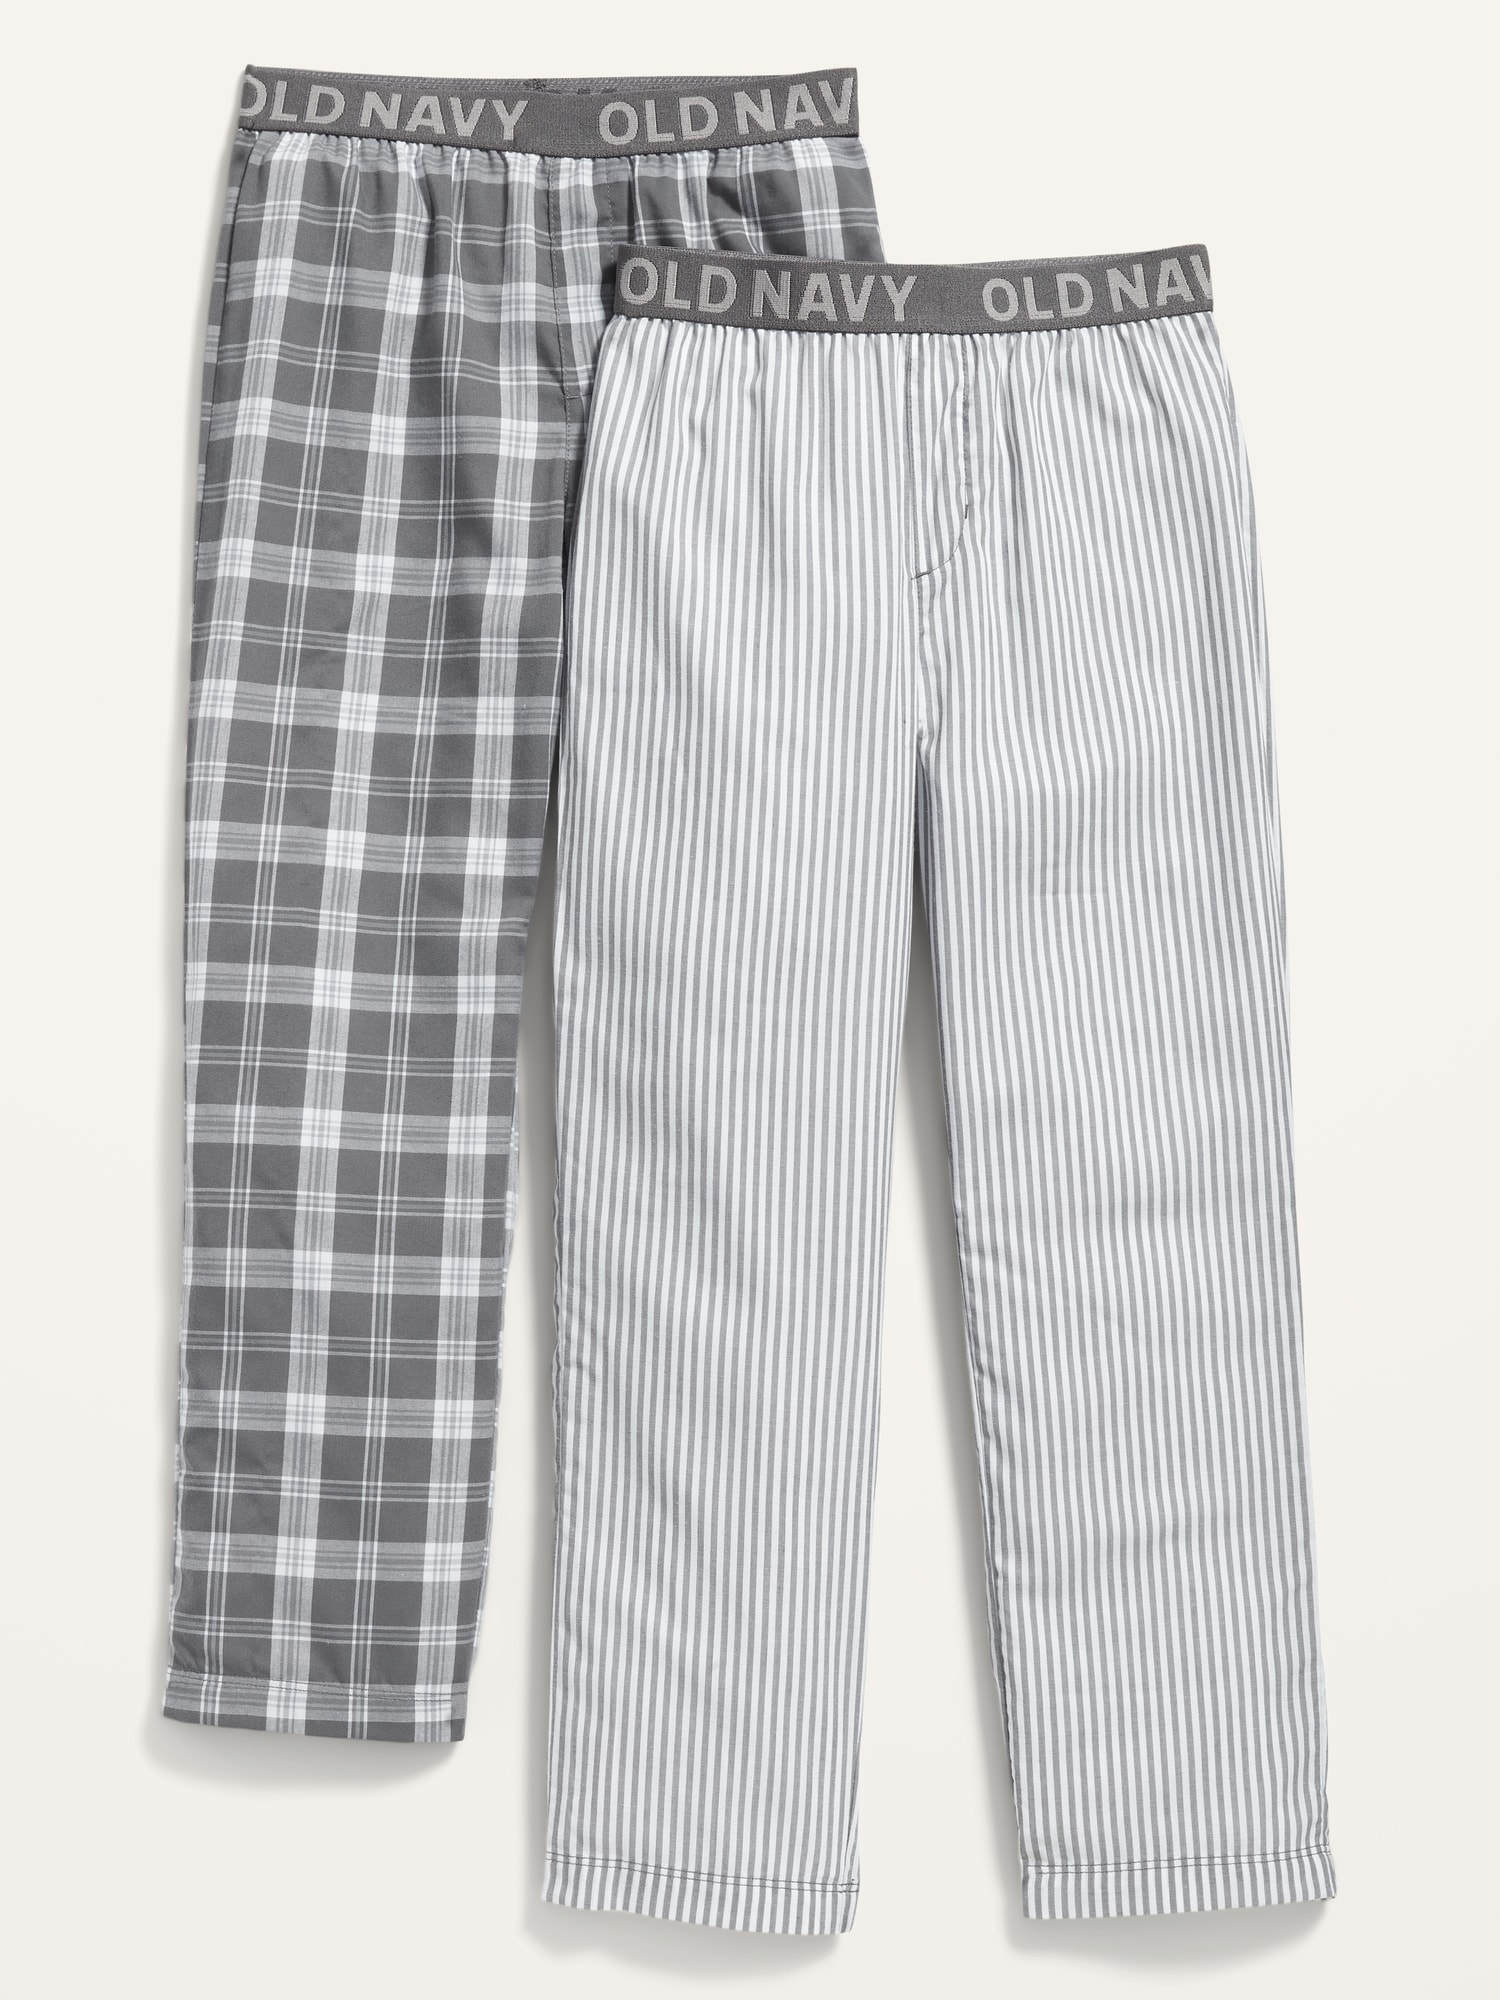 Old Navy Patterned Poplin Pajama Pants 2-Pack for Boys gray. 1